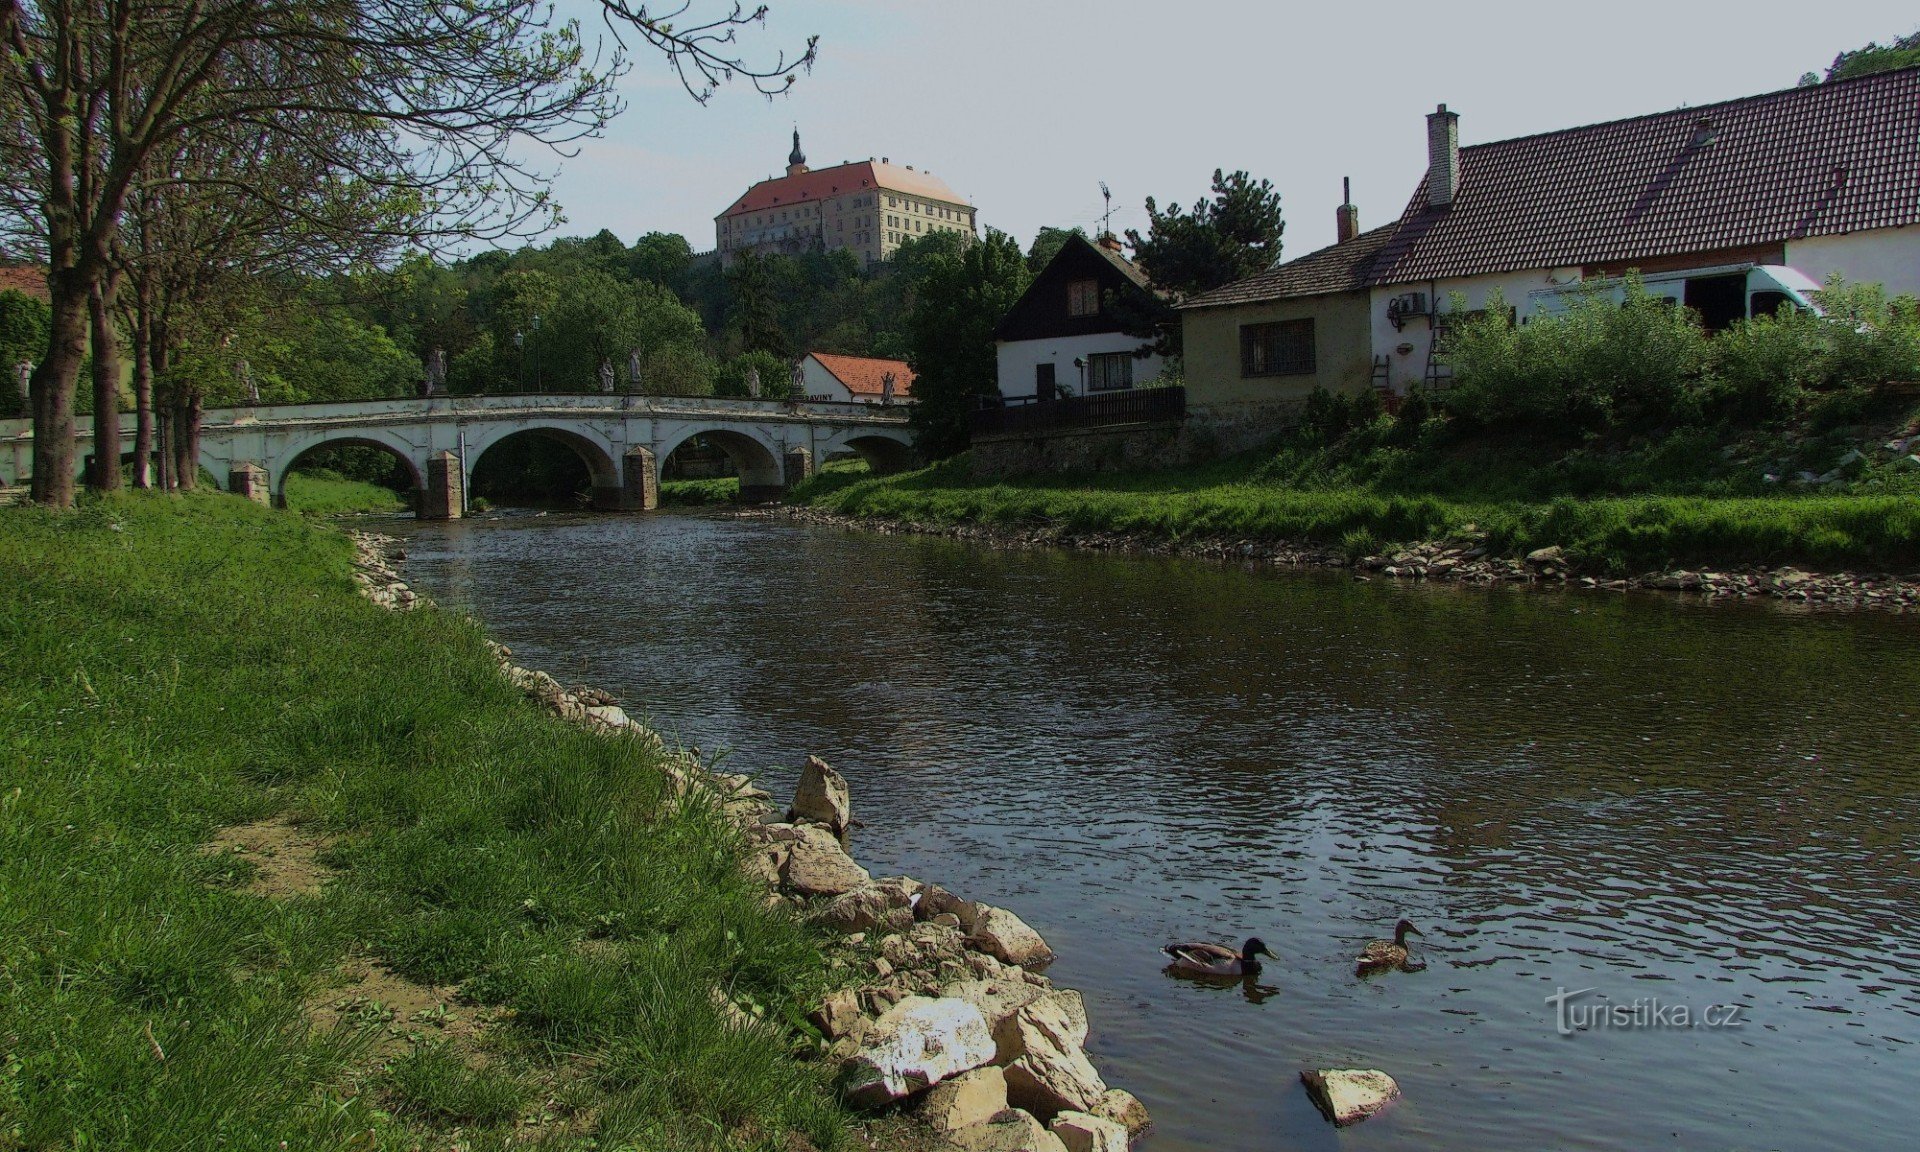 For culture to the castle in Náměšt nad Oslavou